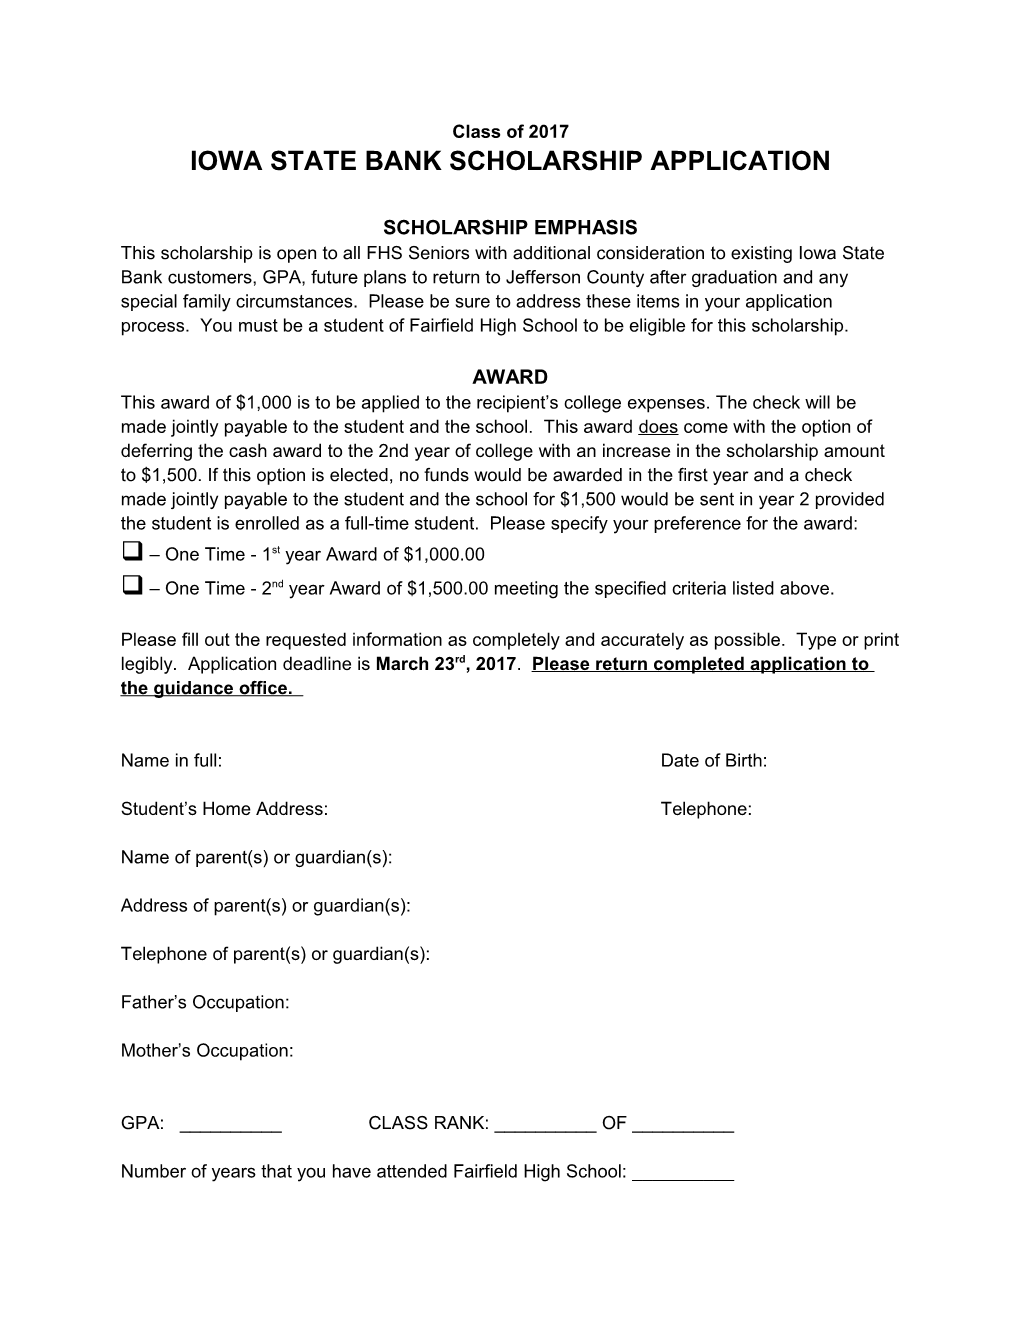 Iowa State Bank Scholarship Application